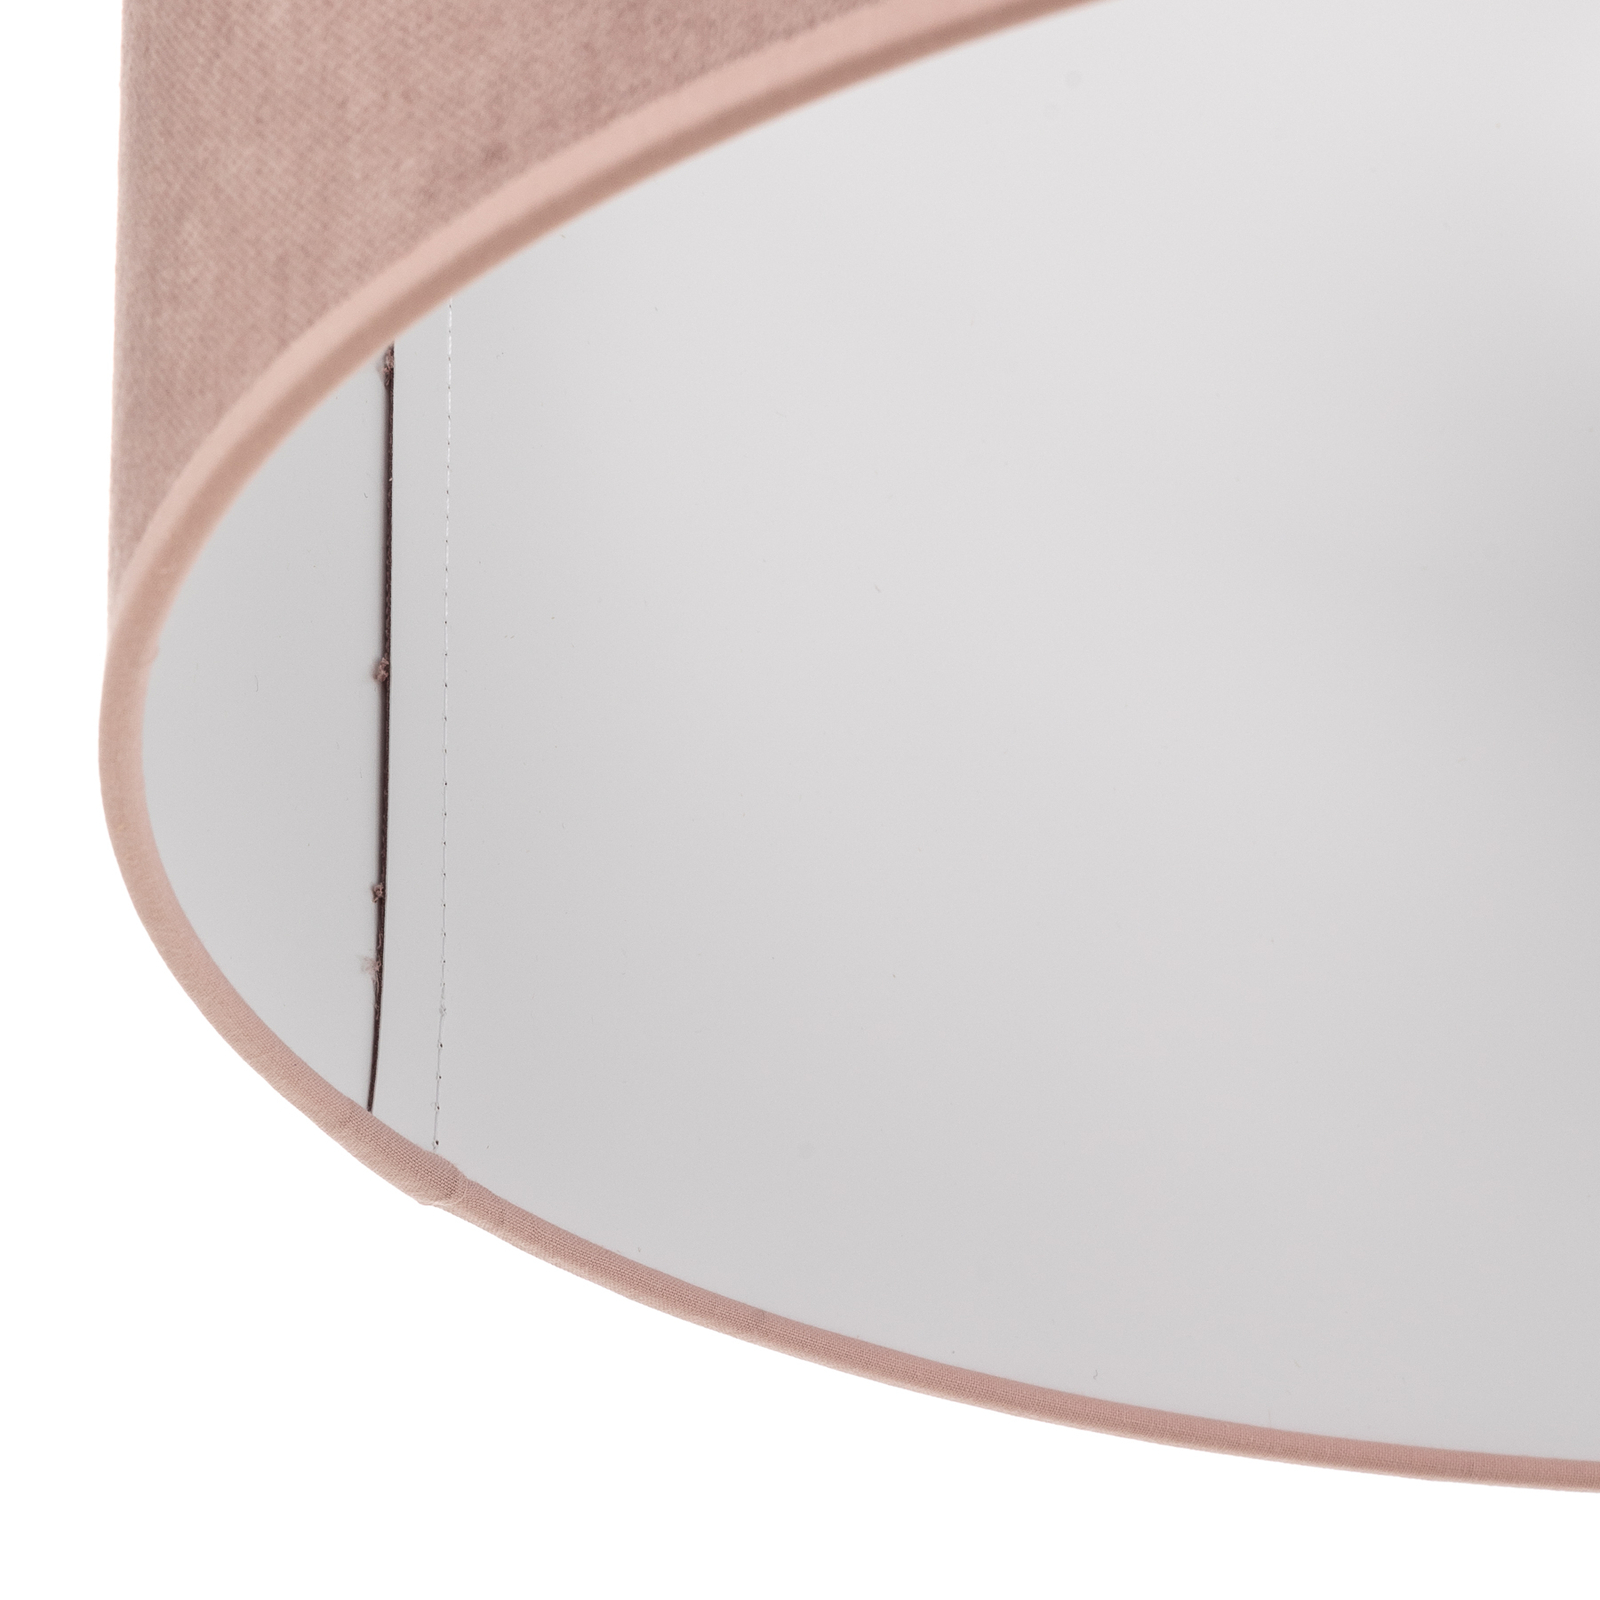 Lampa sufitowa Pastell Roller Ø 45 cm różowa